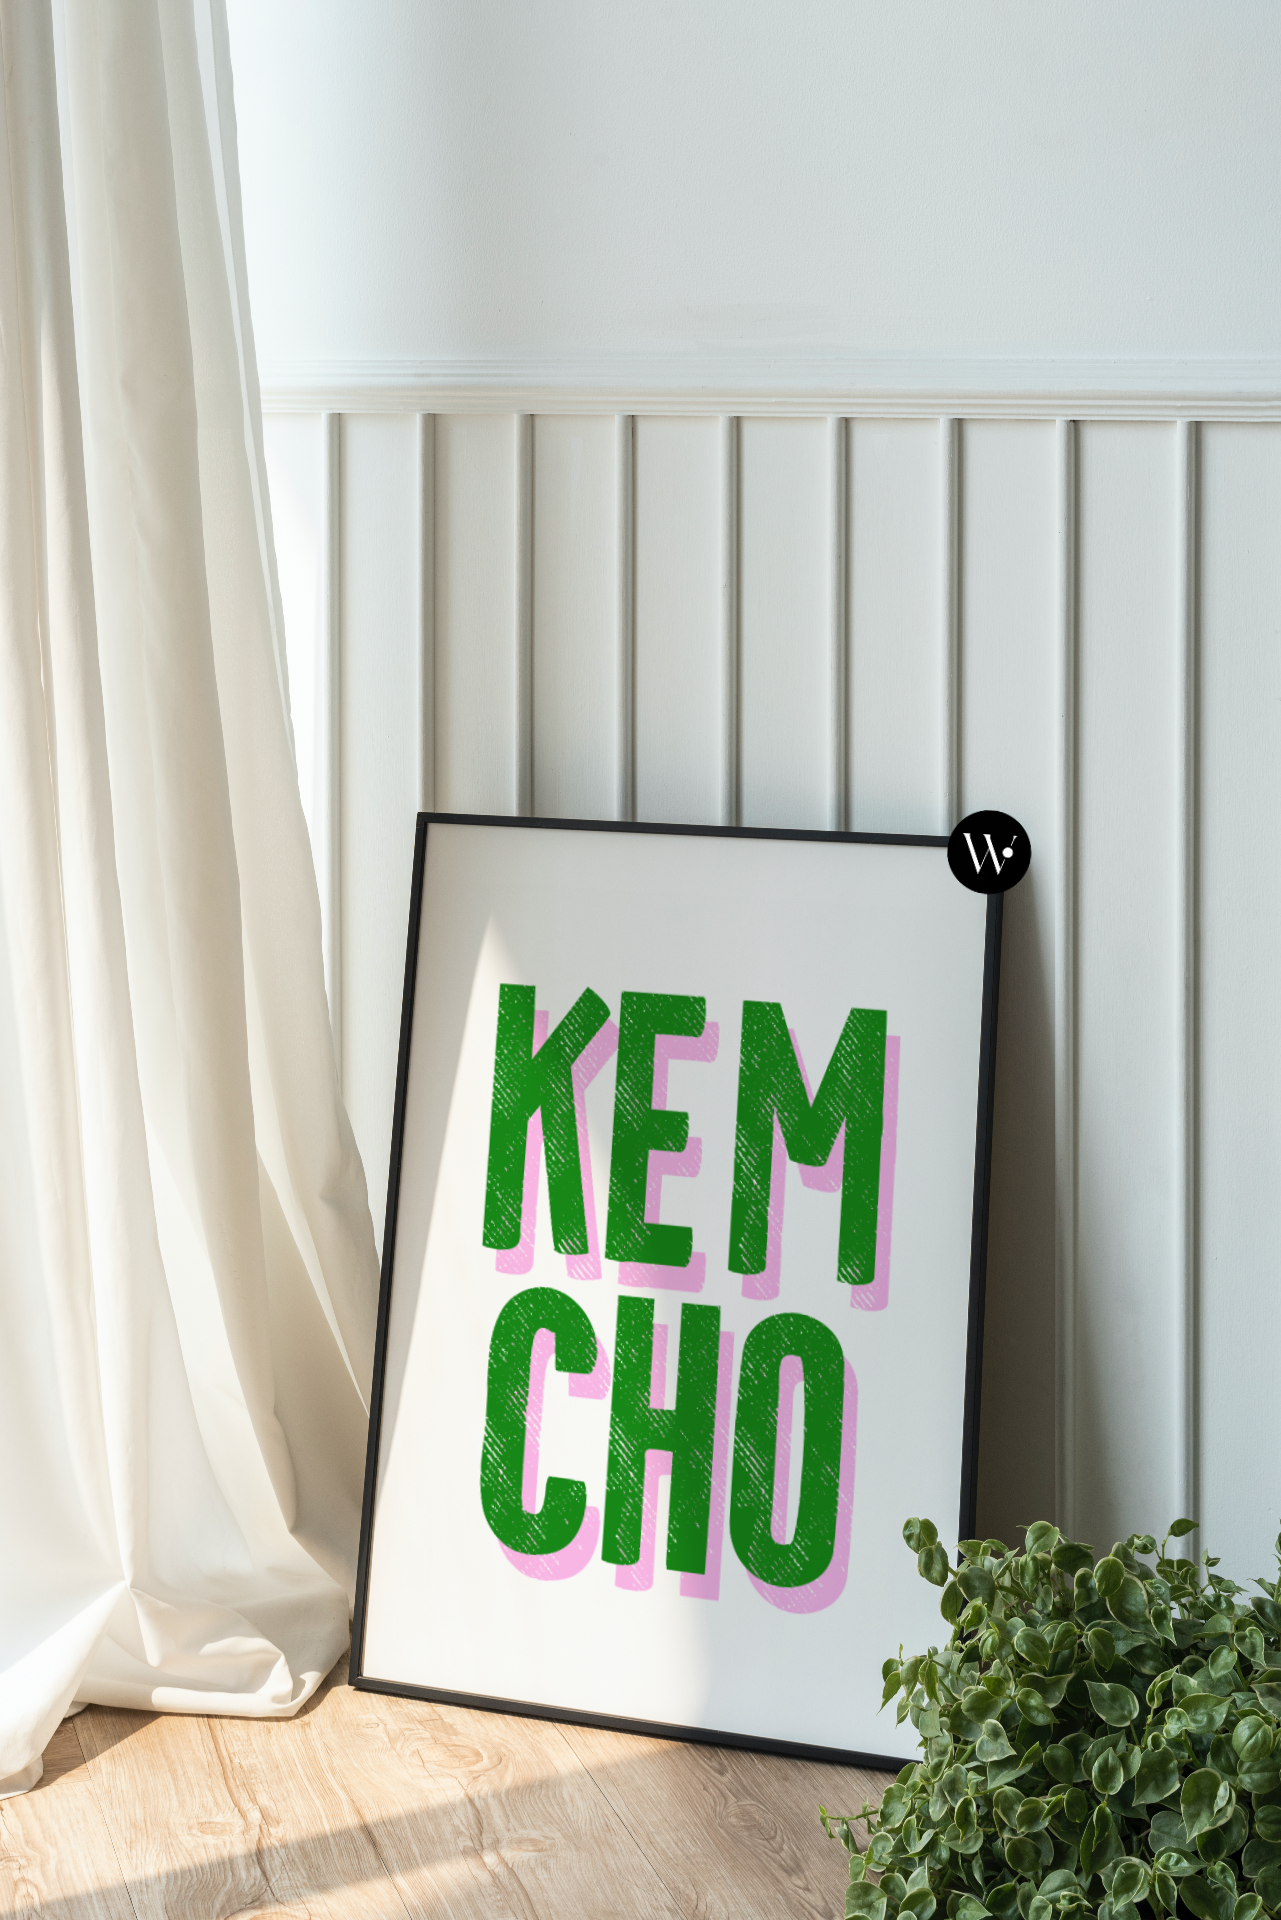 Kem Cho Poster Print